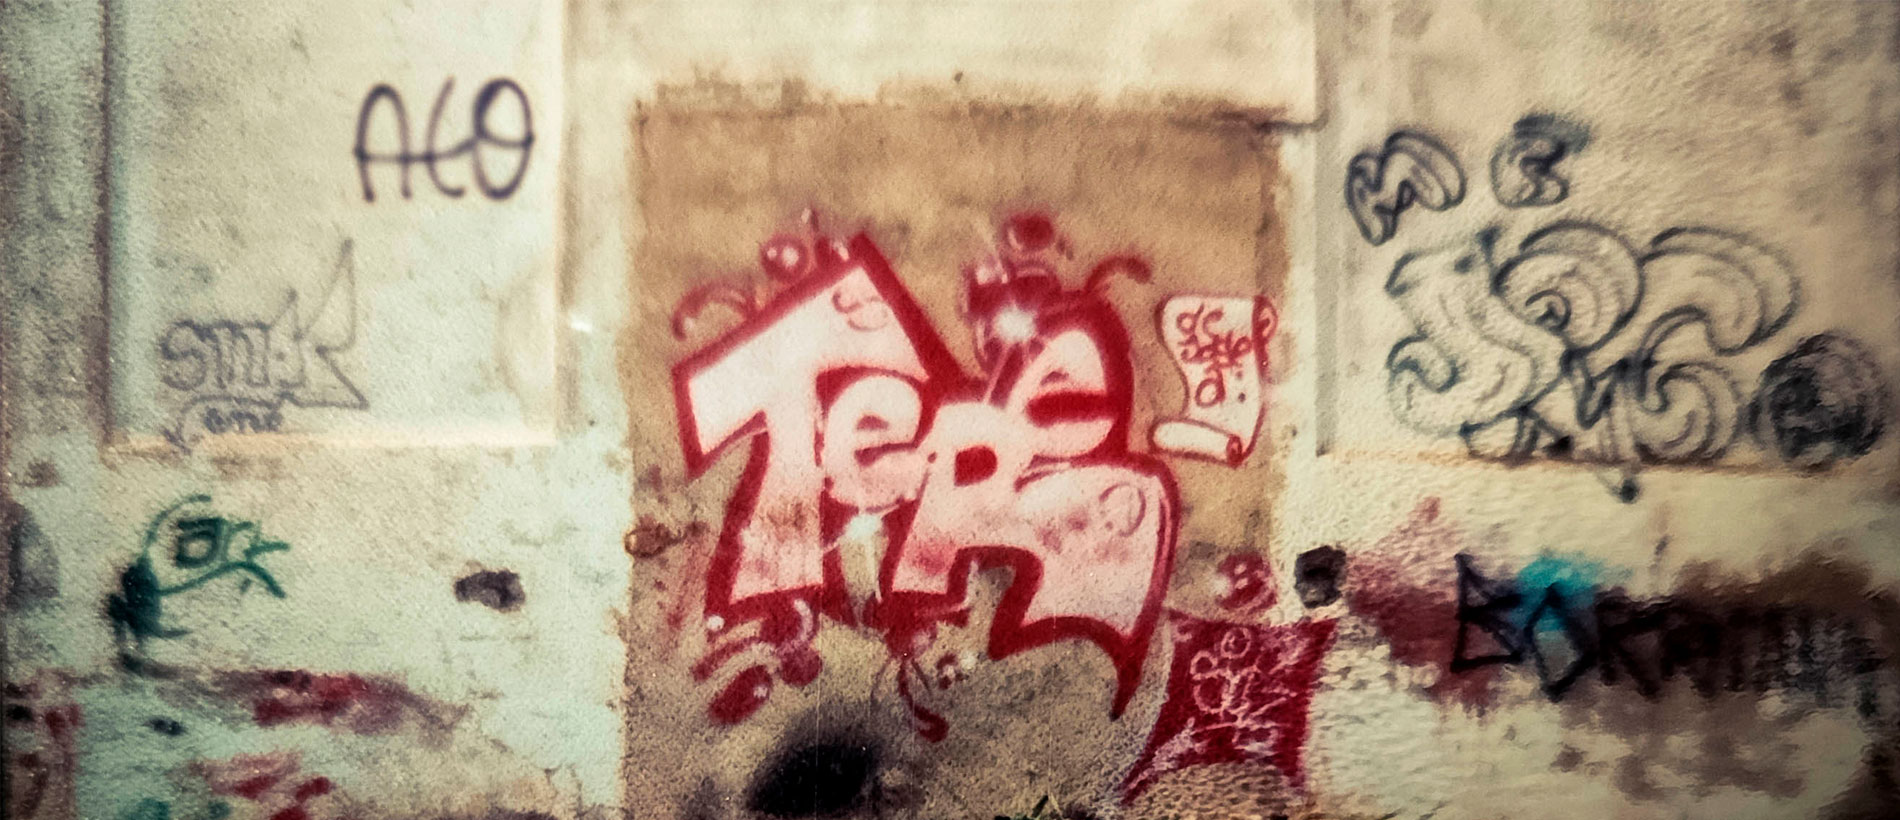 castellon-graffiti-slide